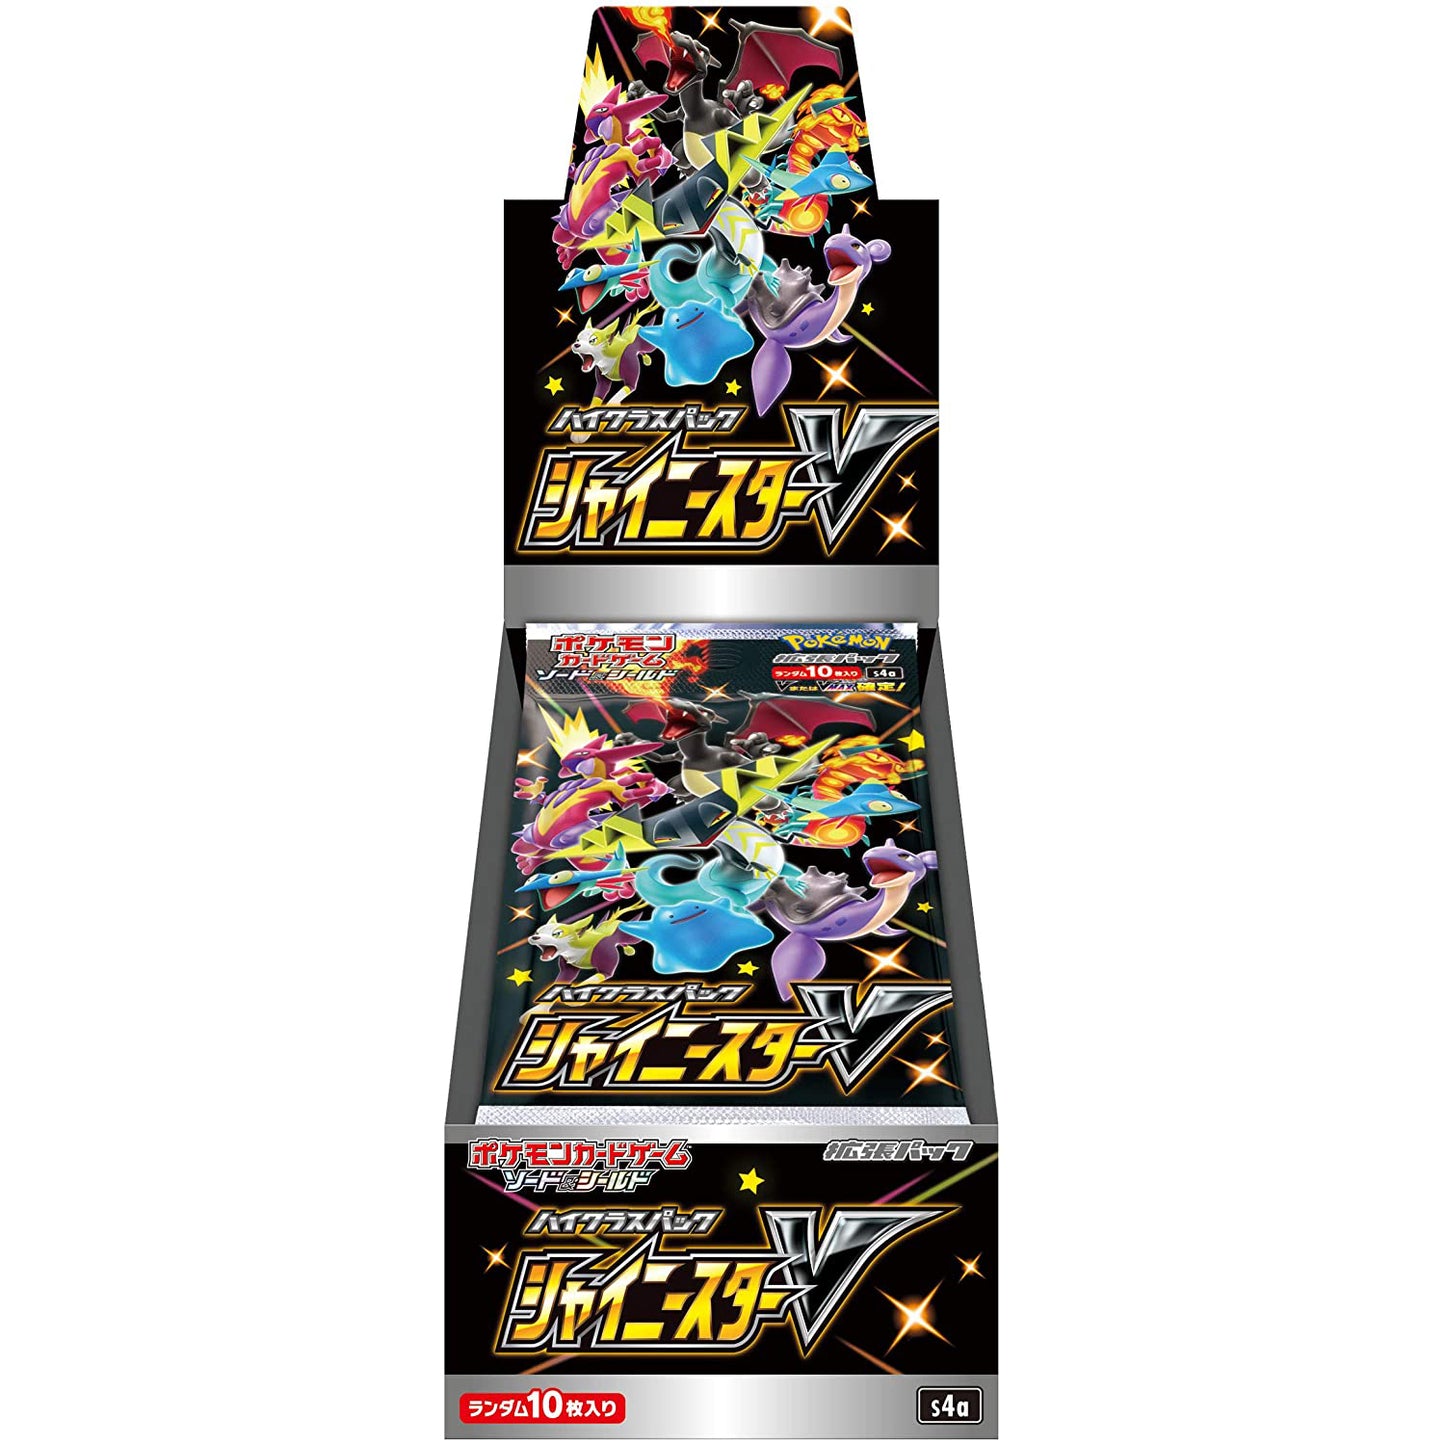 Japanese Pokemon Shiny Star V Booster Box S4a